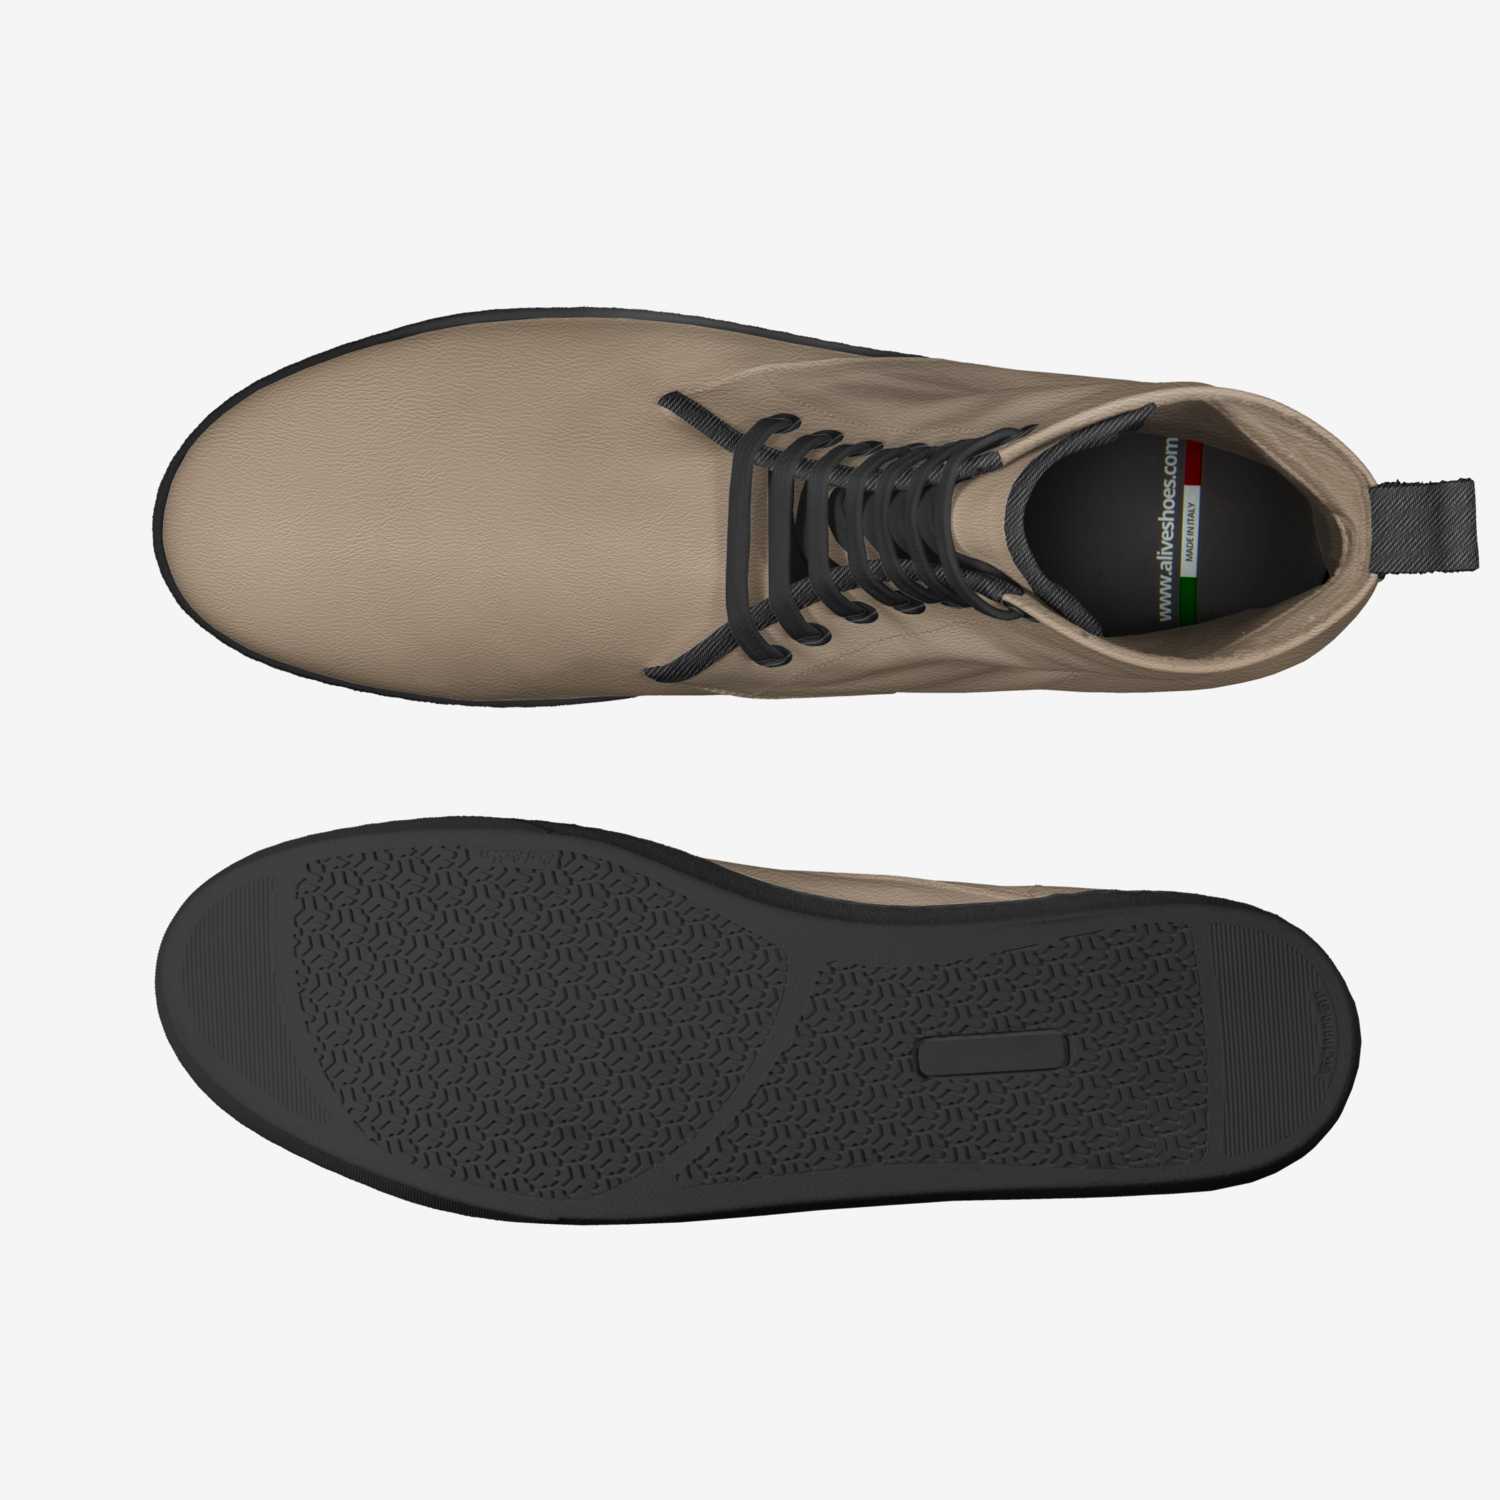 Ryker | A Custom Shoe concept by Heinz Boller